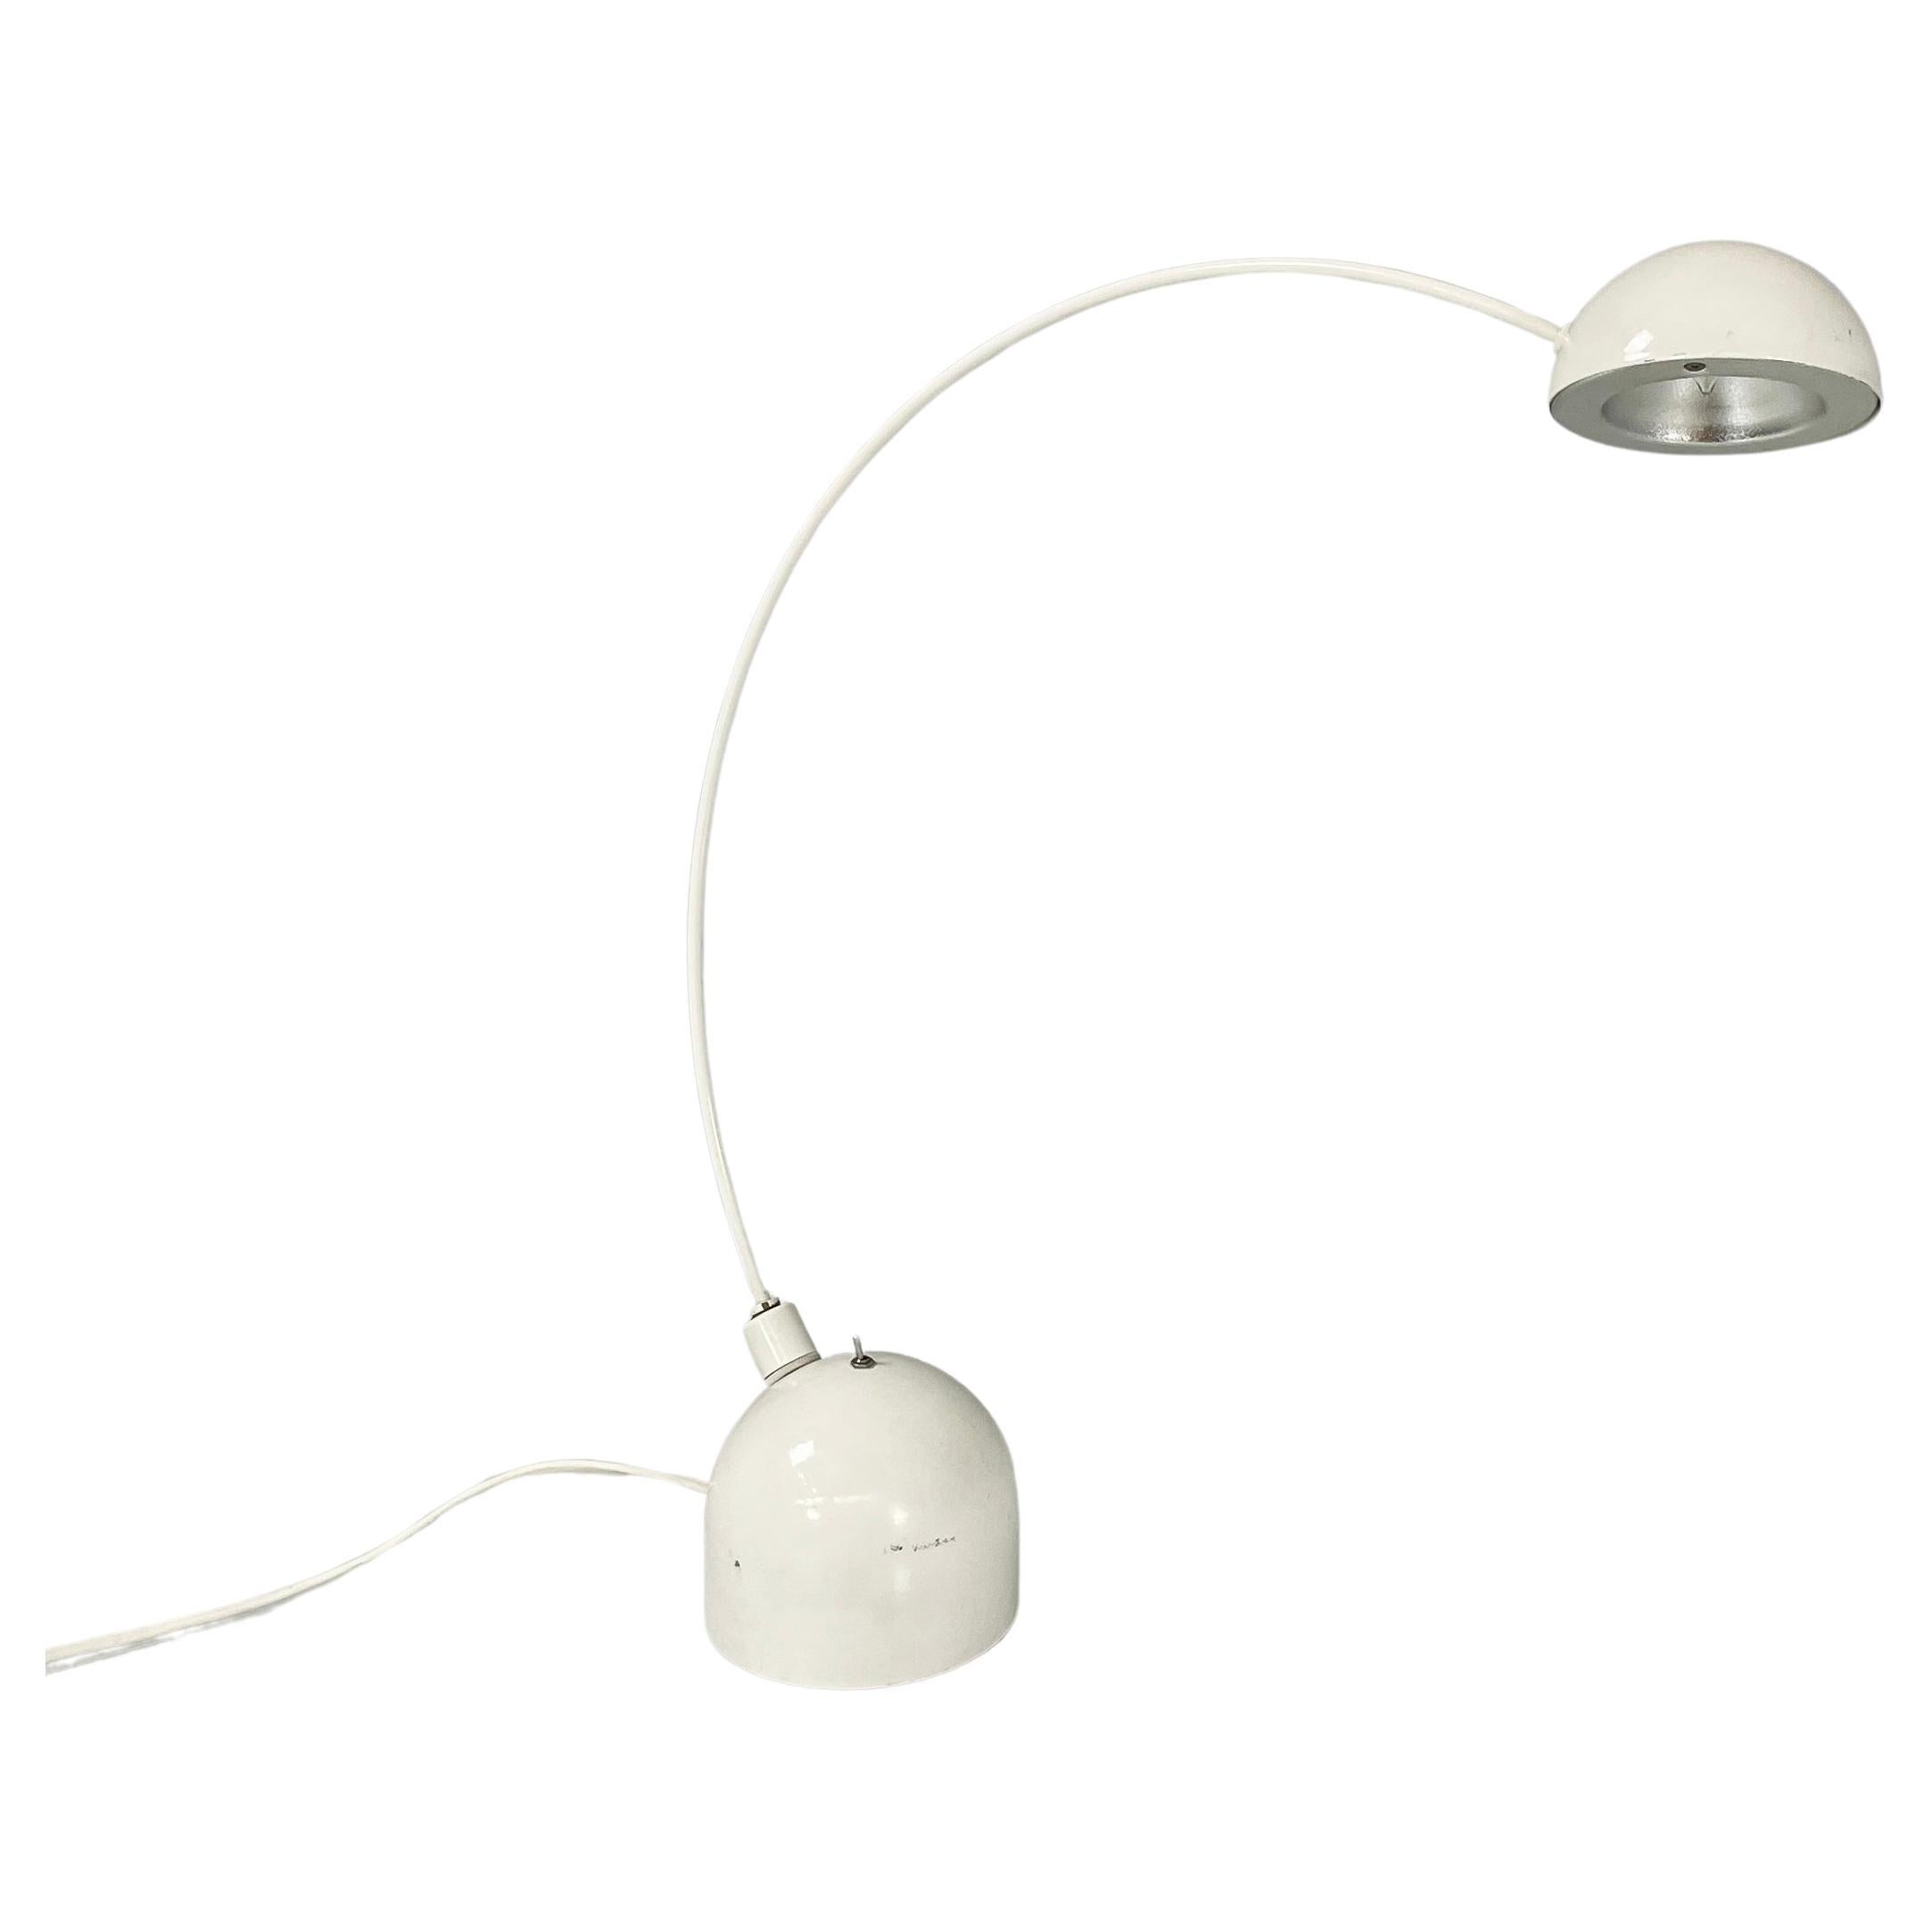 Italian modern Adjustable or desk table lamp in white metal, 1970s